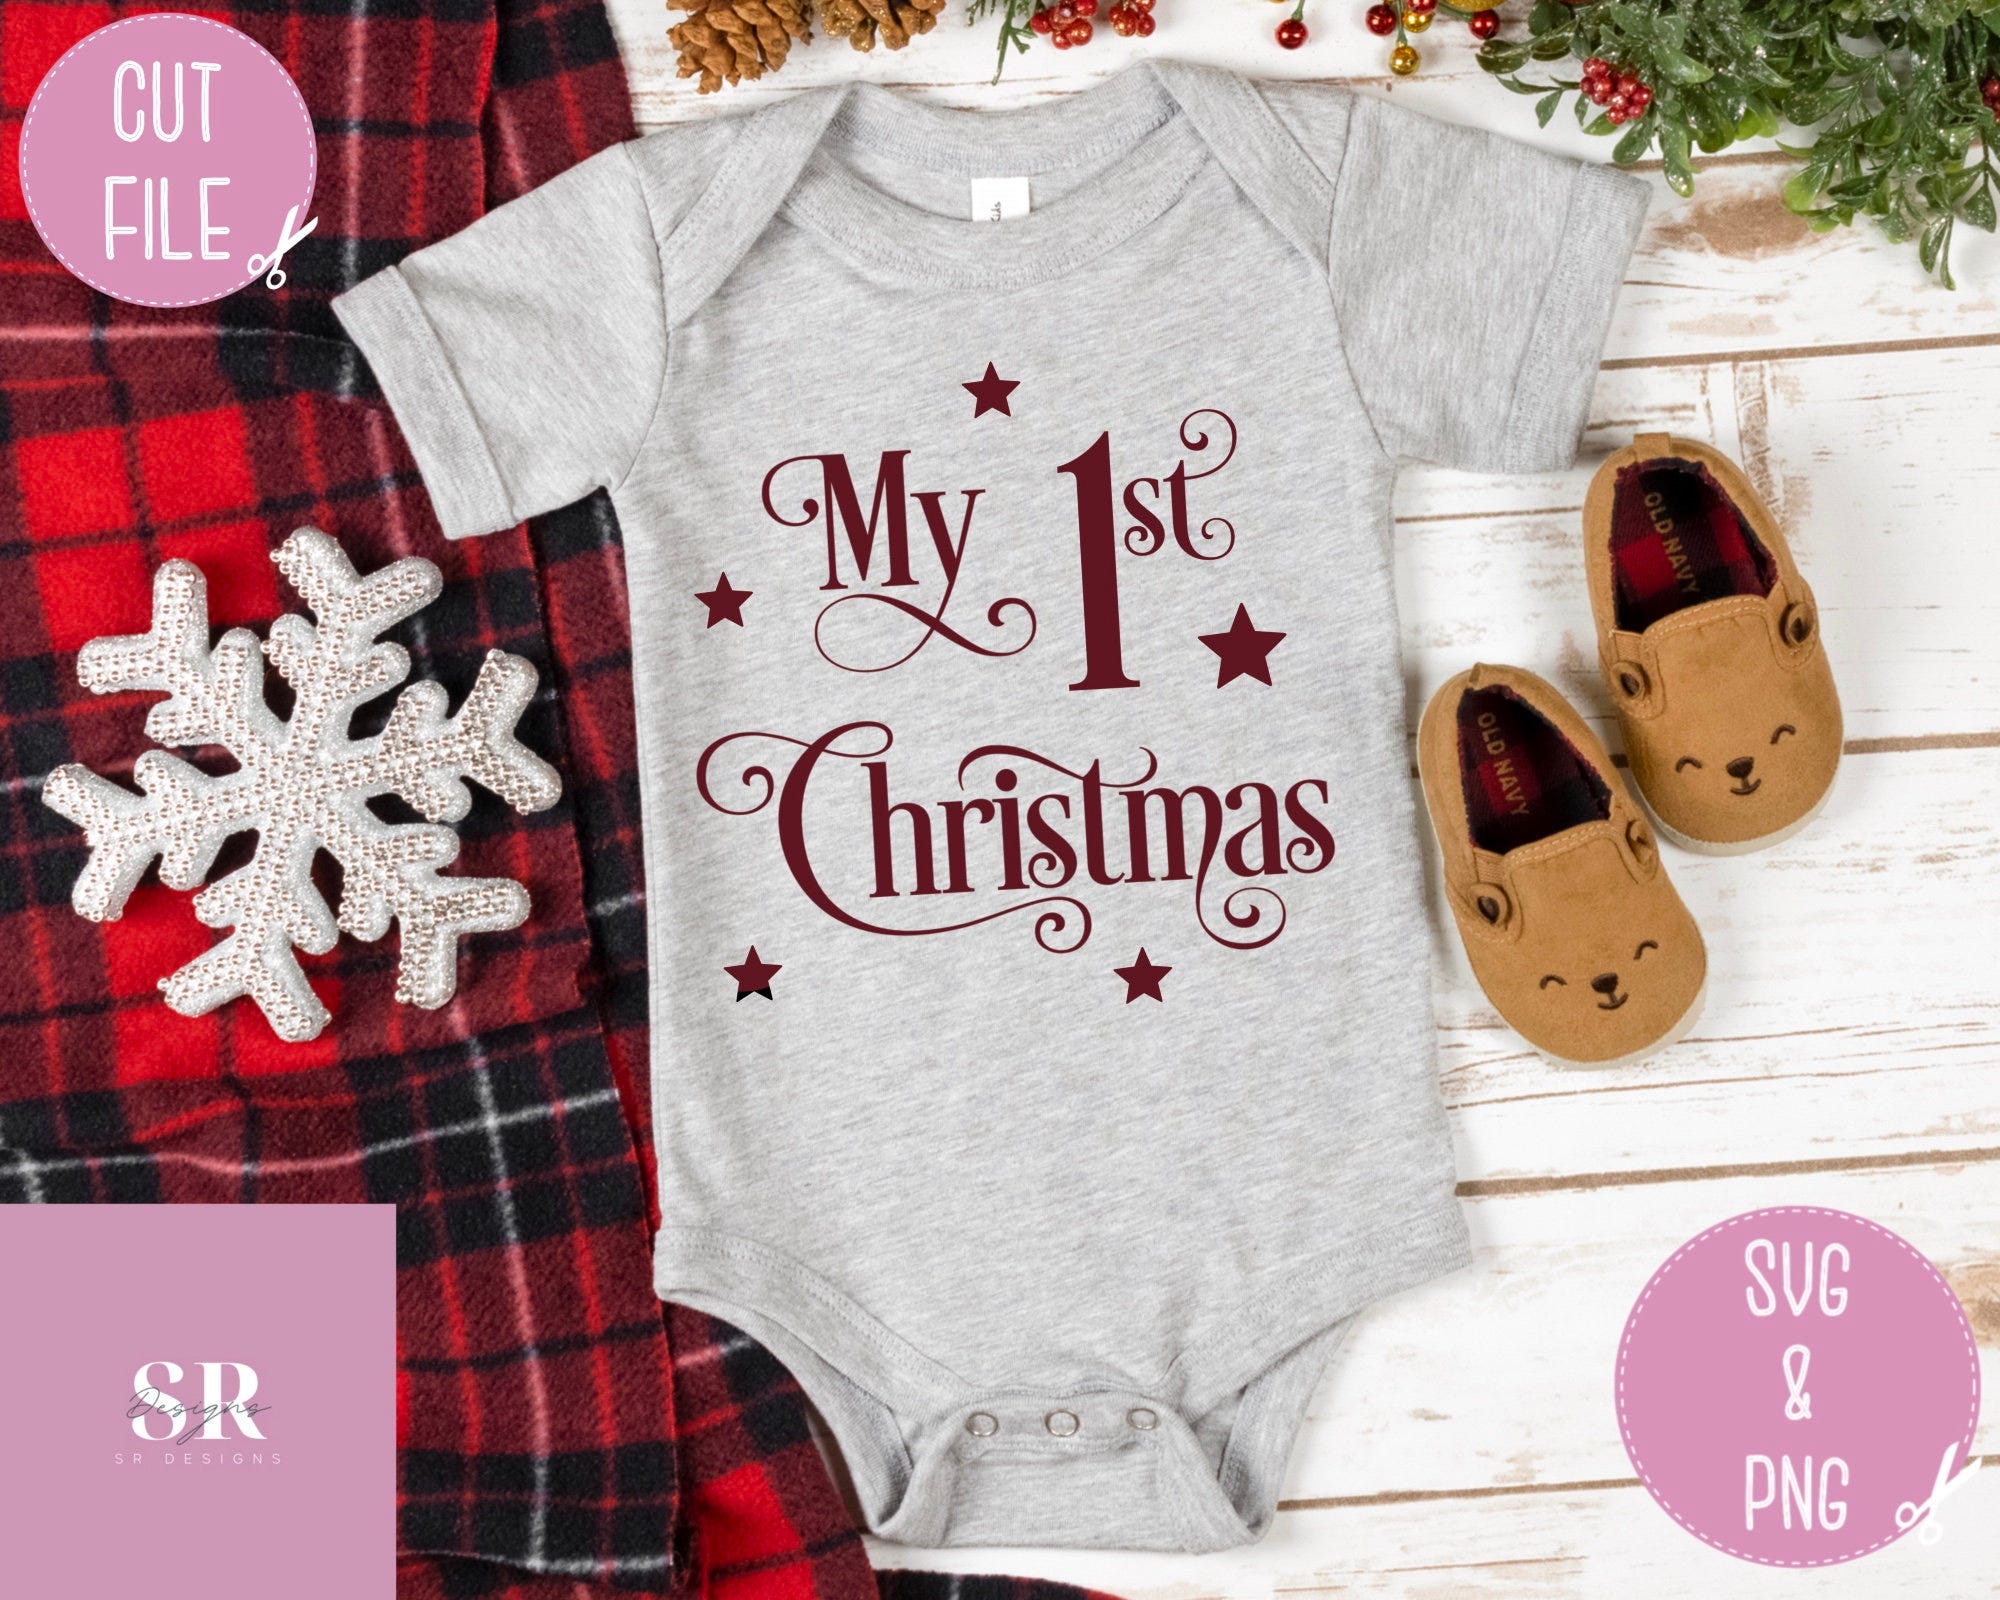 SVG: My First Christmas. My 1st Christmas svg. Baby’s first Christmas. Baby Christmas onesie svg. Desire Christmas font. Baby Christmas.